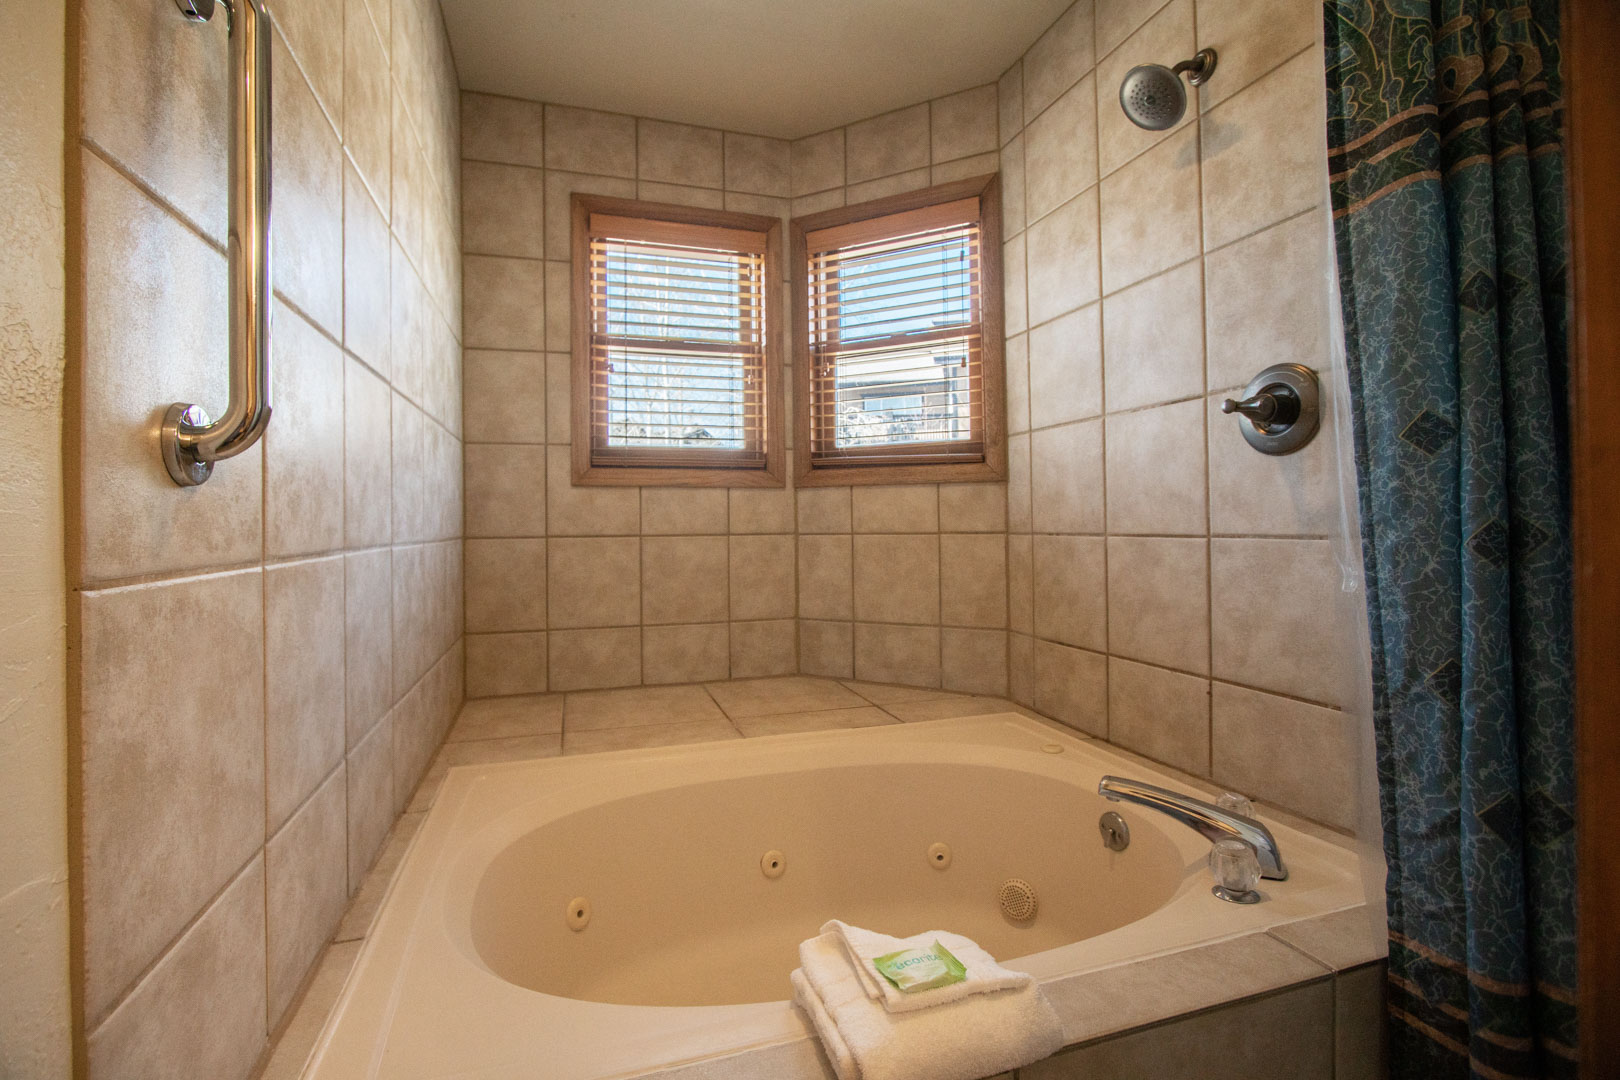 A relaxing bathtub at VRI's Sunburst Resort in Steamboat Springs, Colorado.